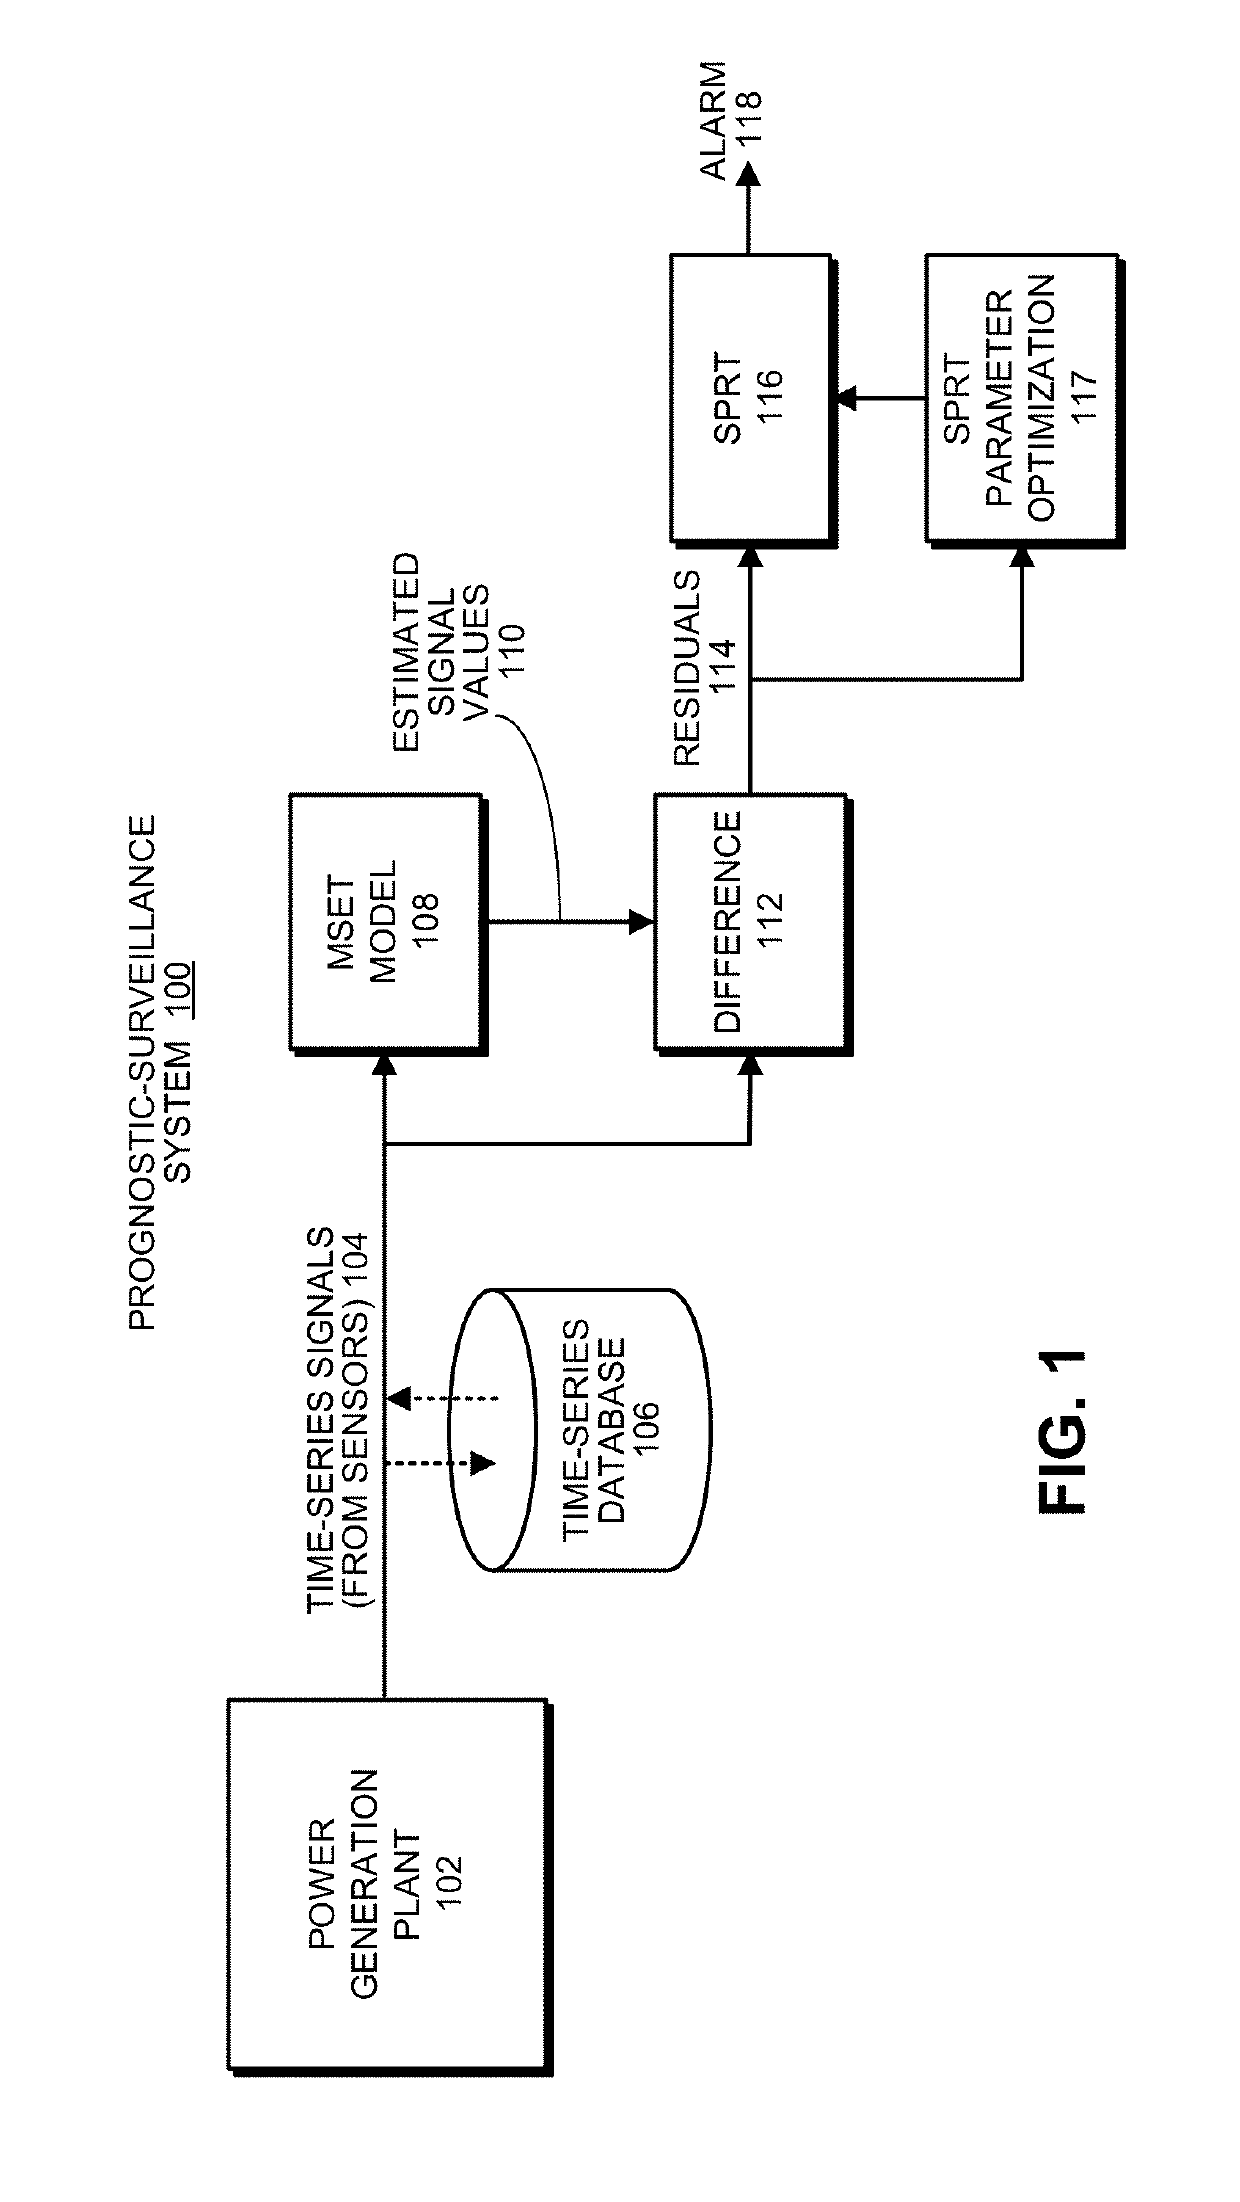 Bivariate optimization technique for tuning sprt parameters to facilitate prognostic surveillance of sensor data from power plants